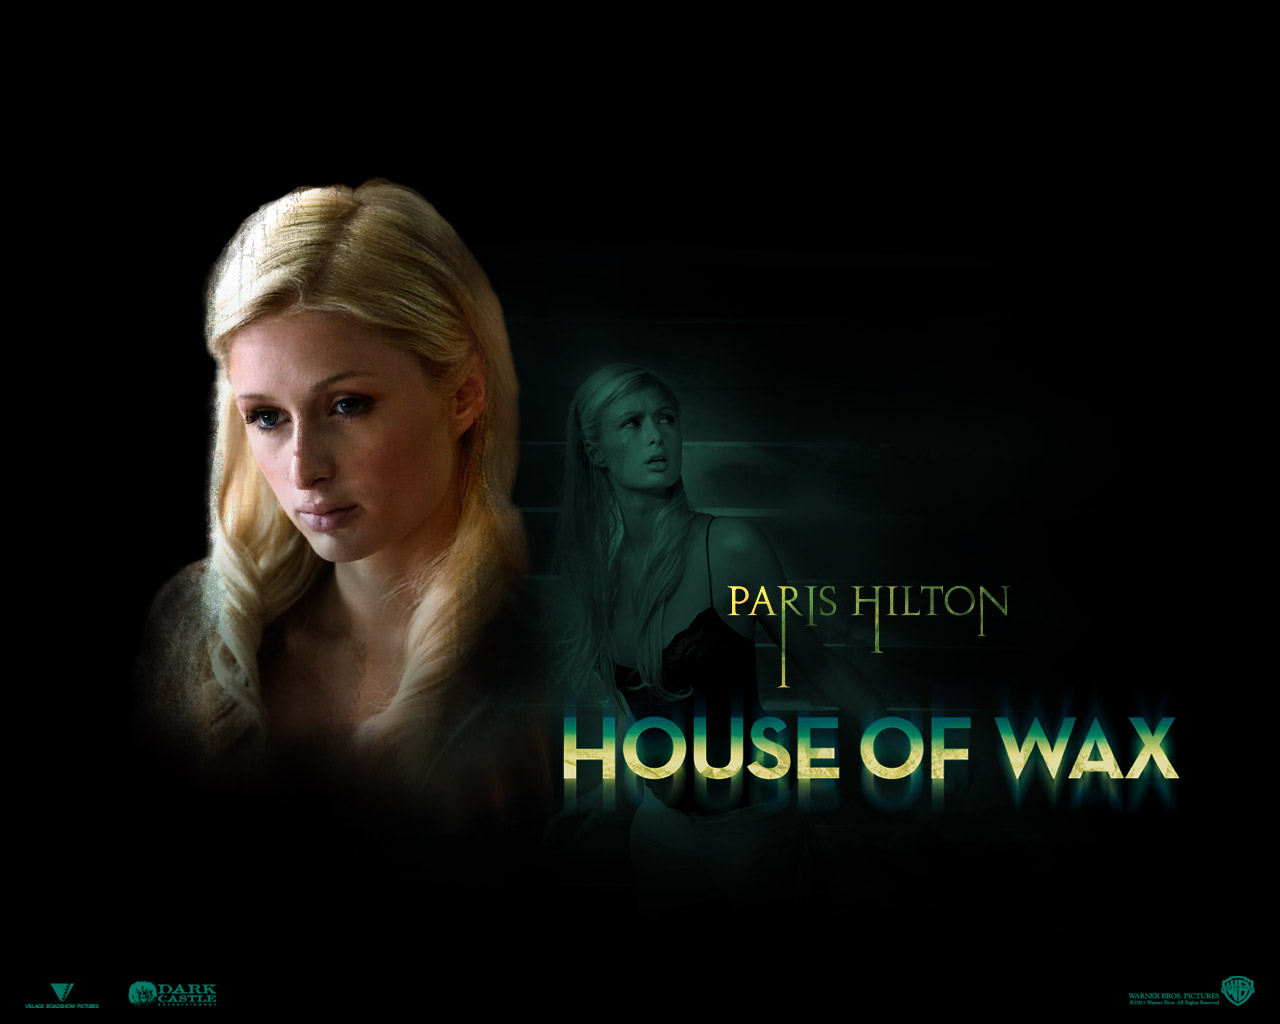 Paris Hilton in House of Wax Wallpaper 2